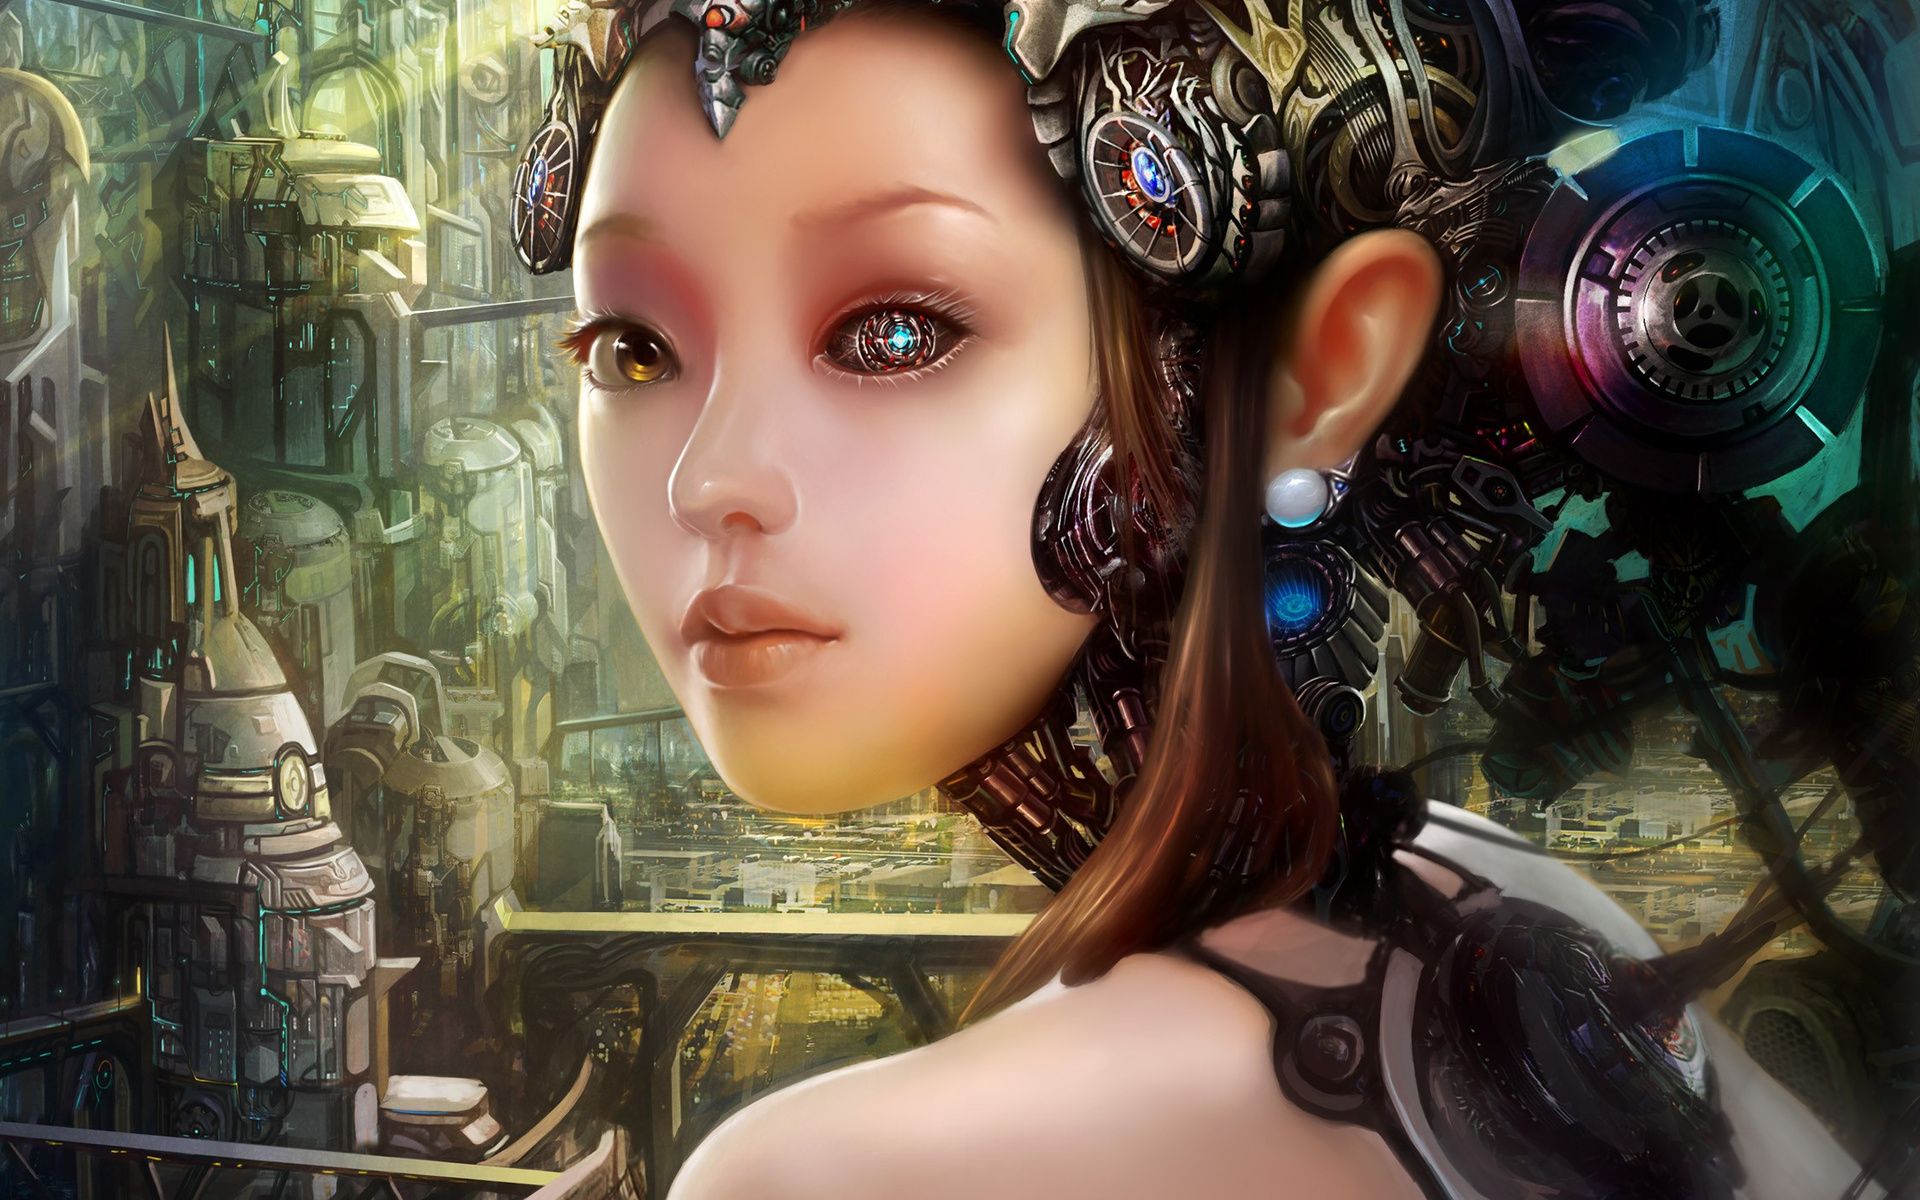 Sci Fi Science Fiction Robots Cyborgs Women Girls Technical